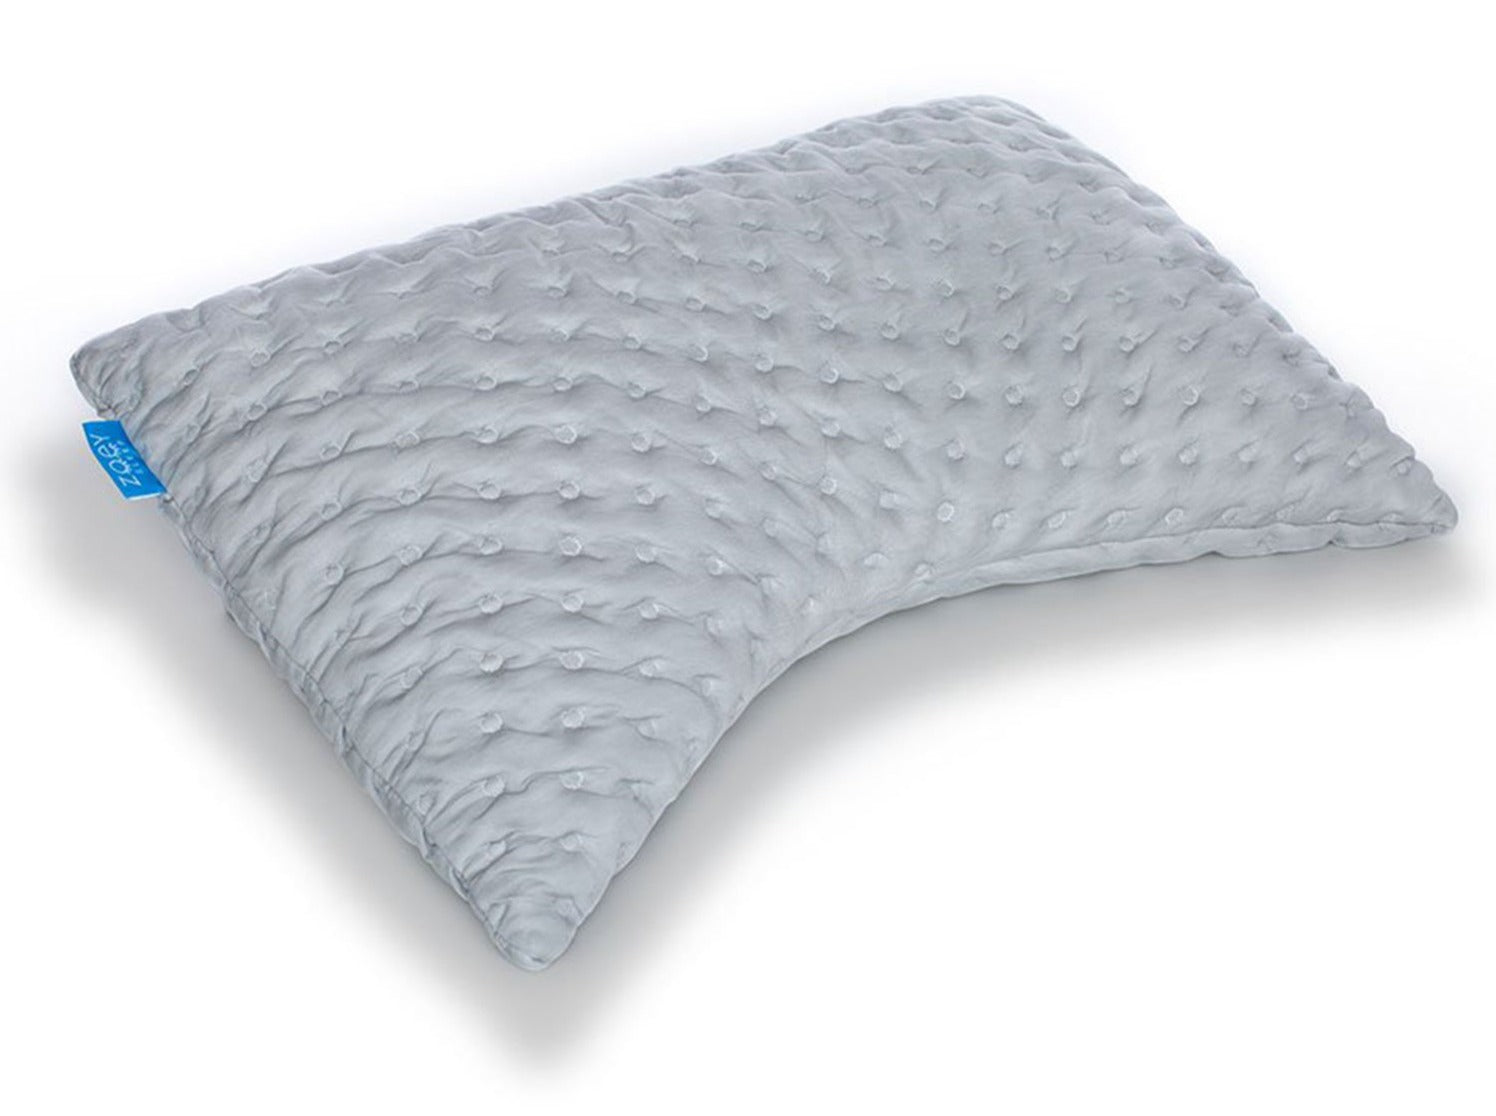 Zoey Curve Pillow – Zoey Sleep